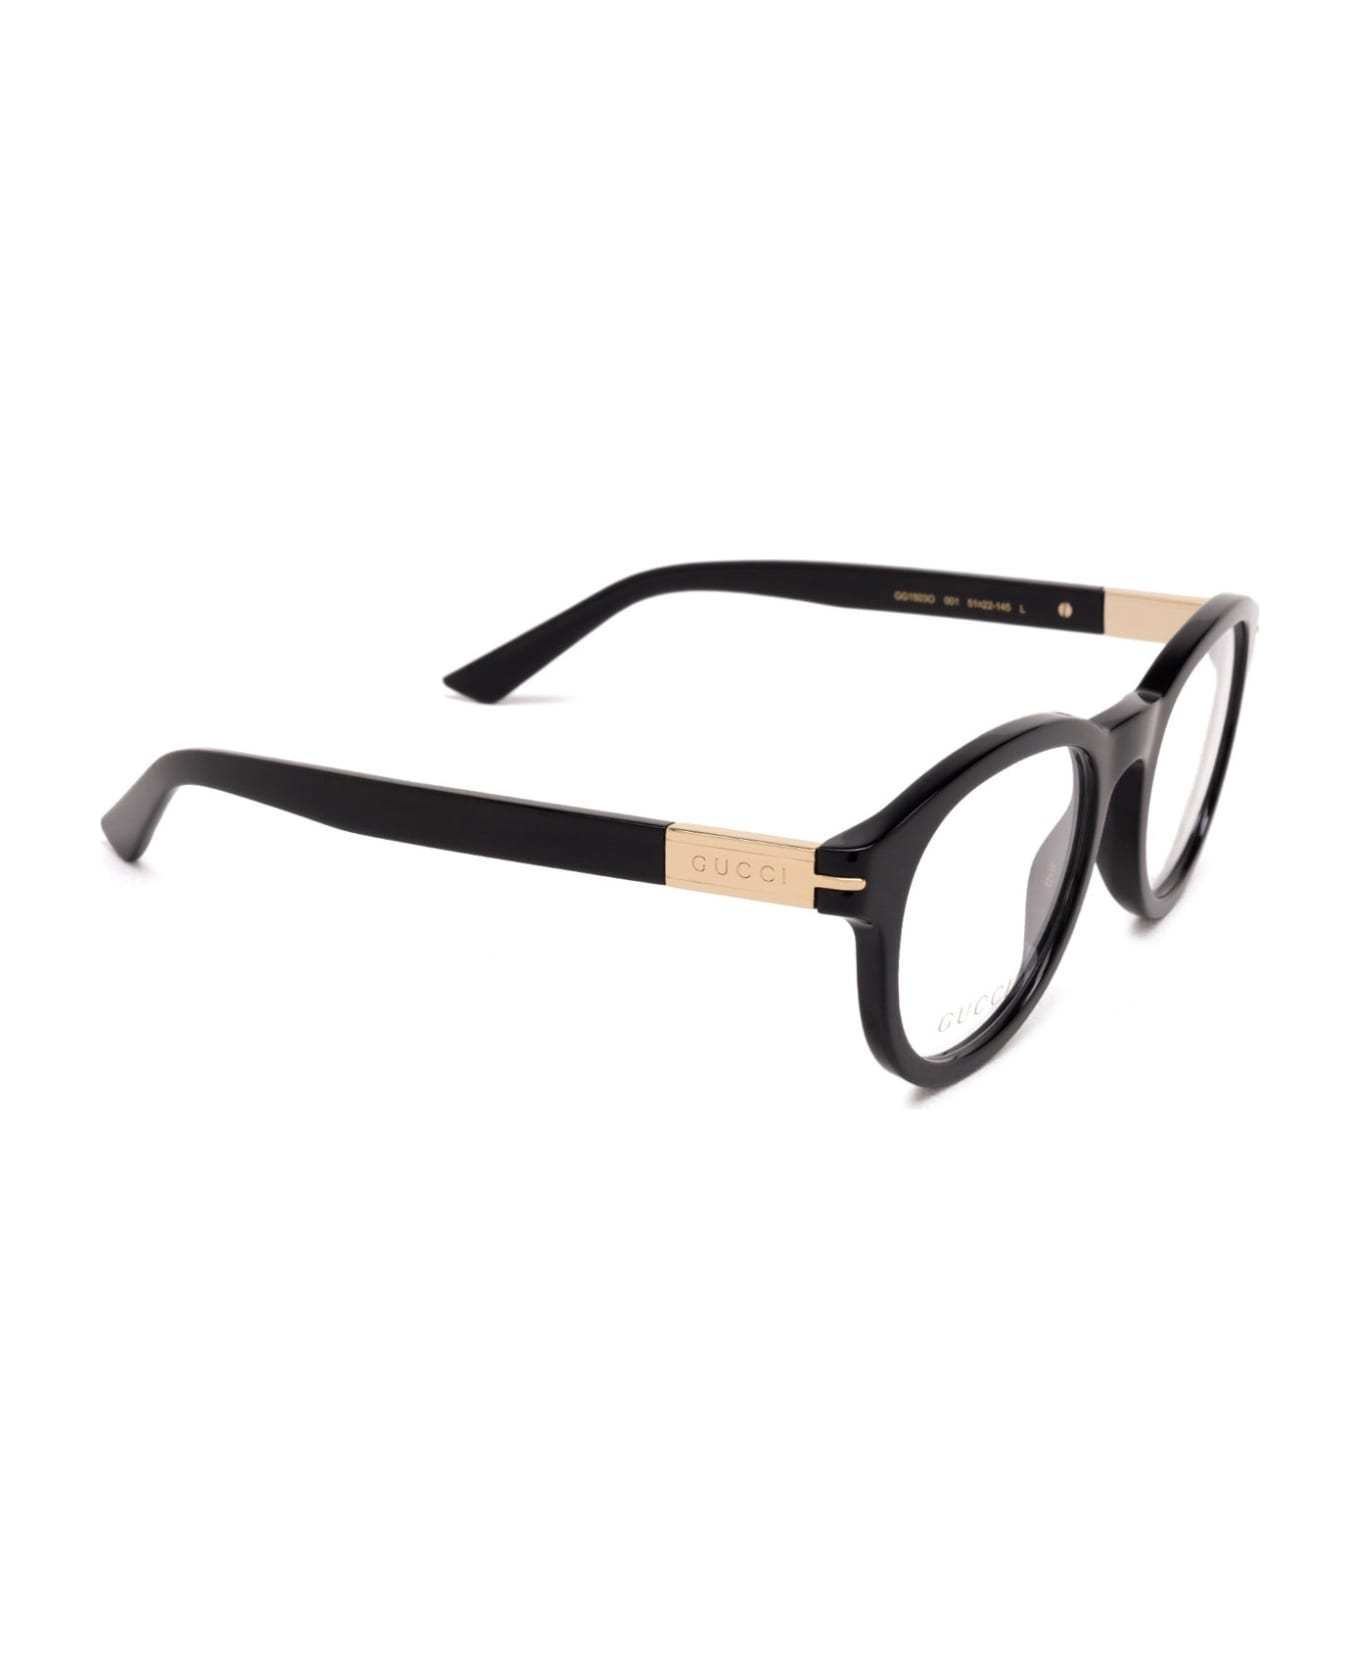 Gucci Eyewear Gg1503o Black Glasses - Black アイウェア